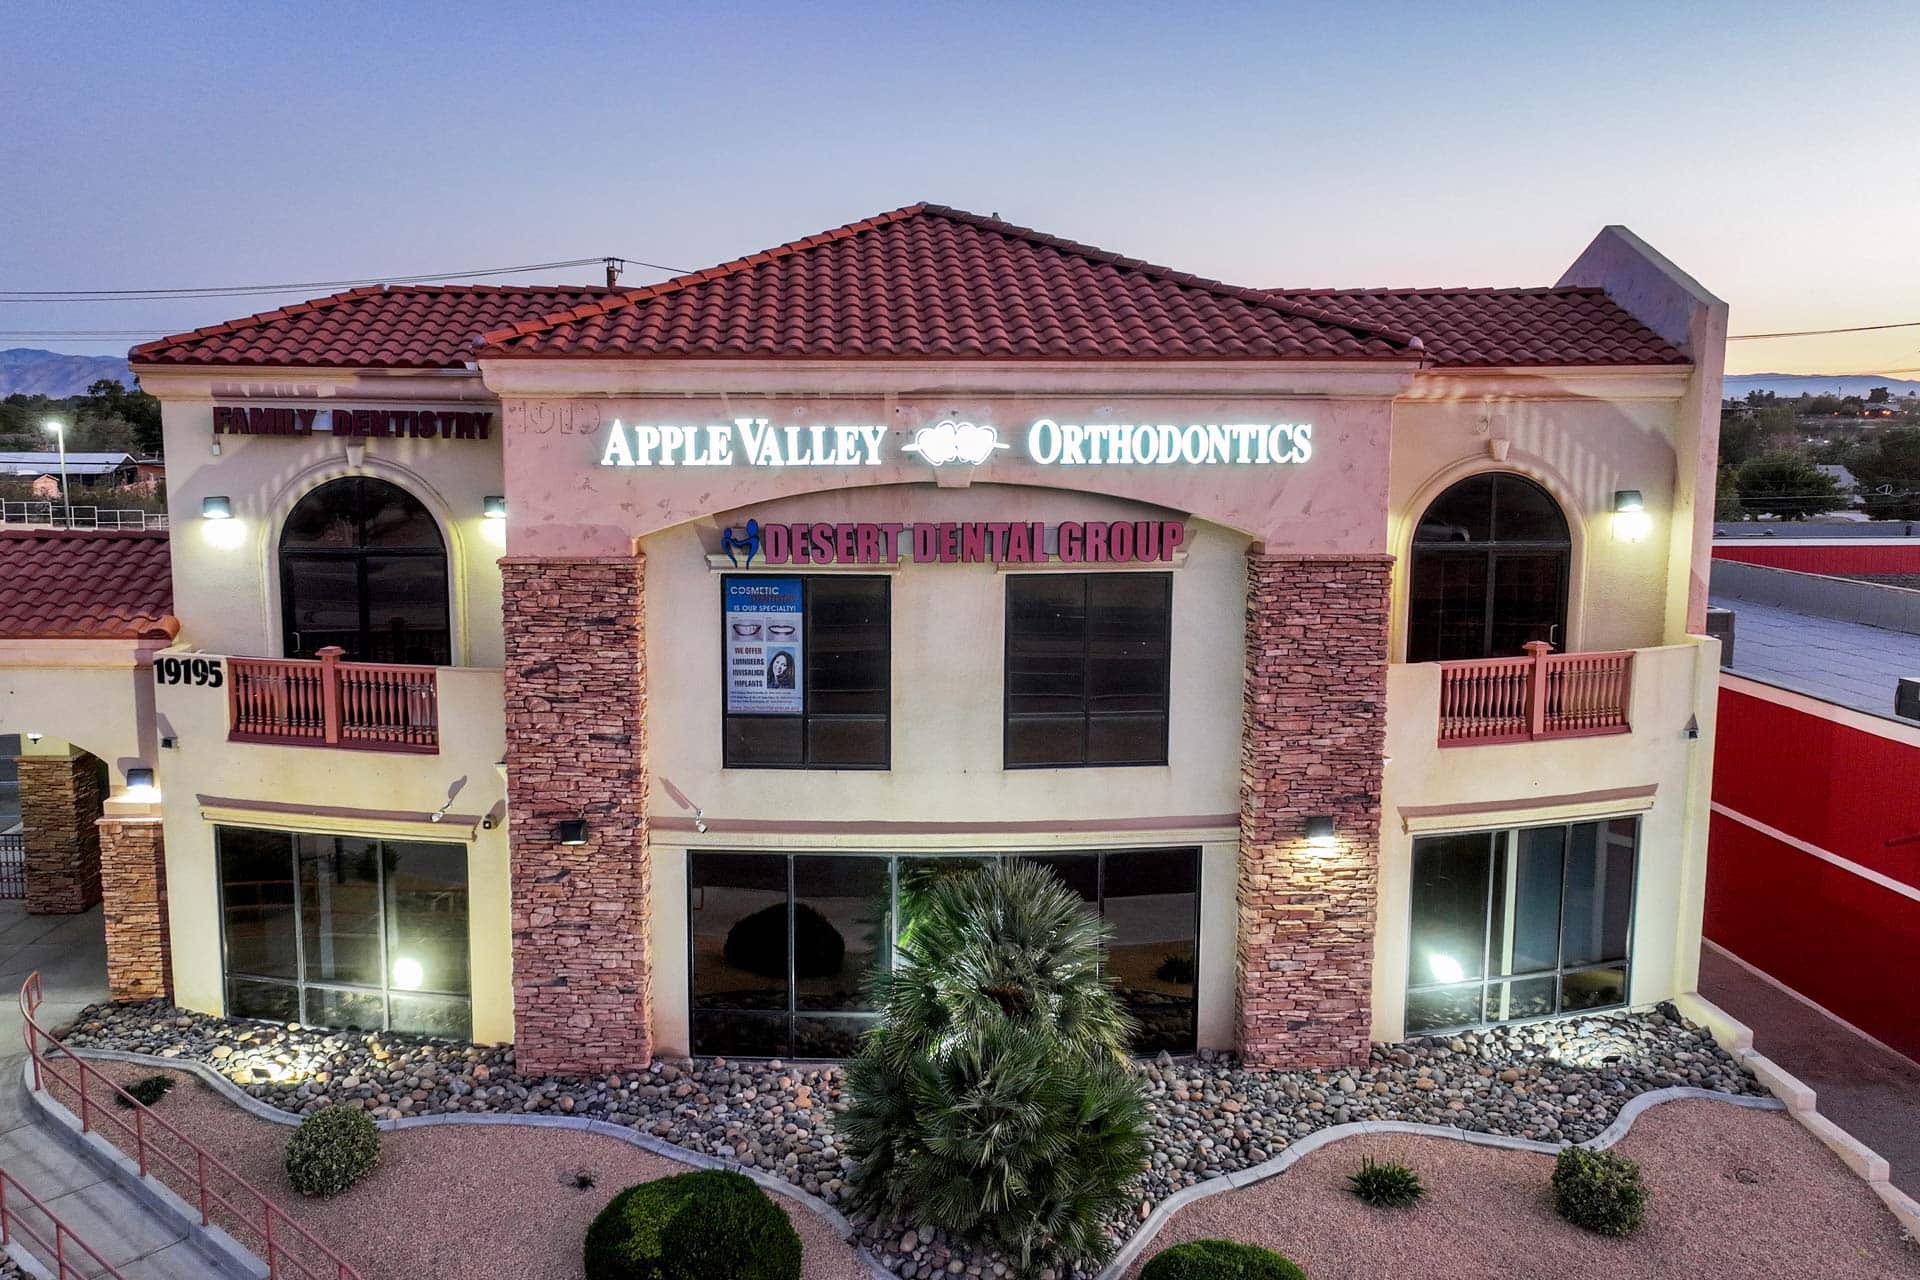 Apple Valley Orthodontics outside